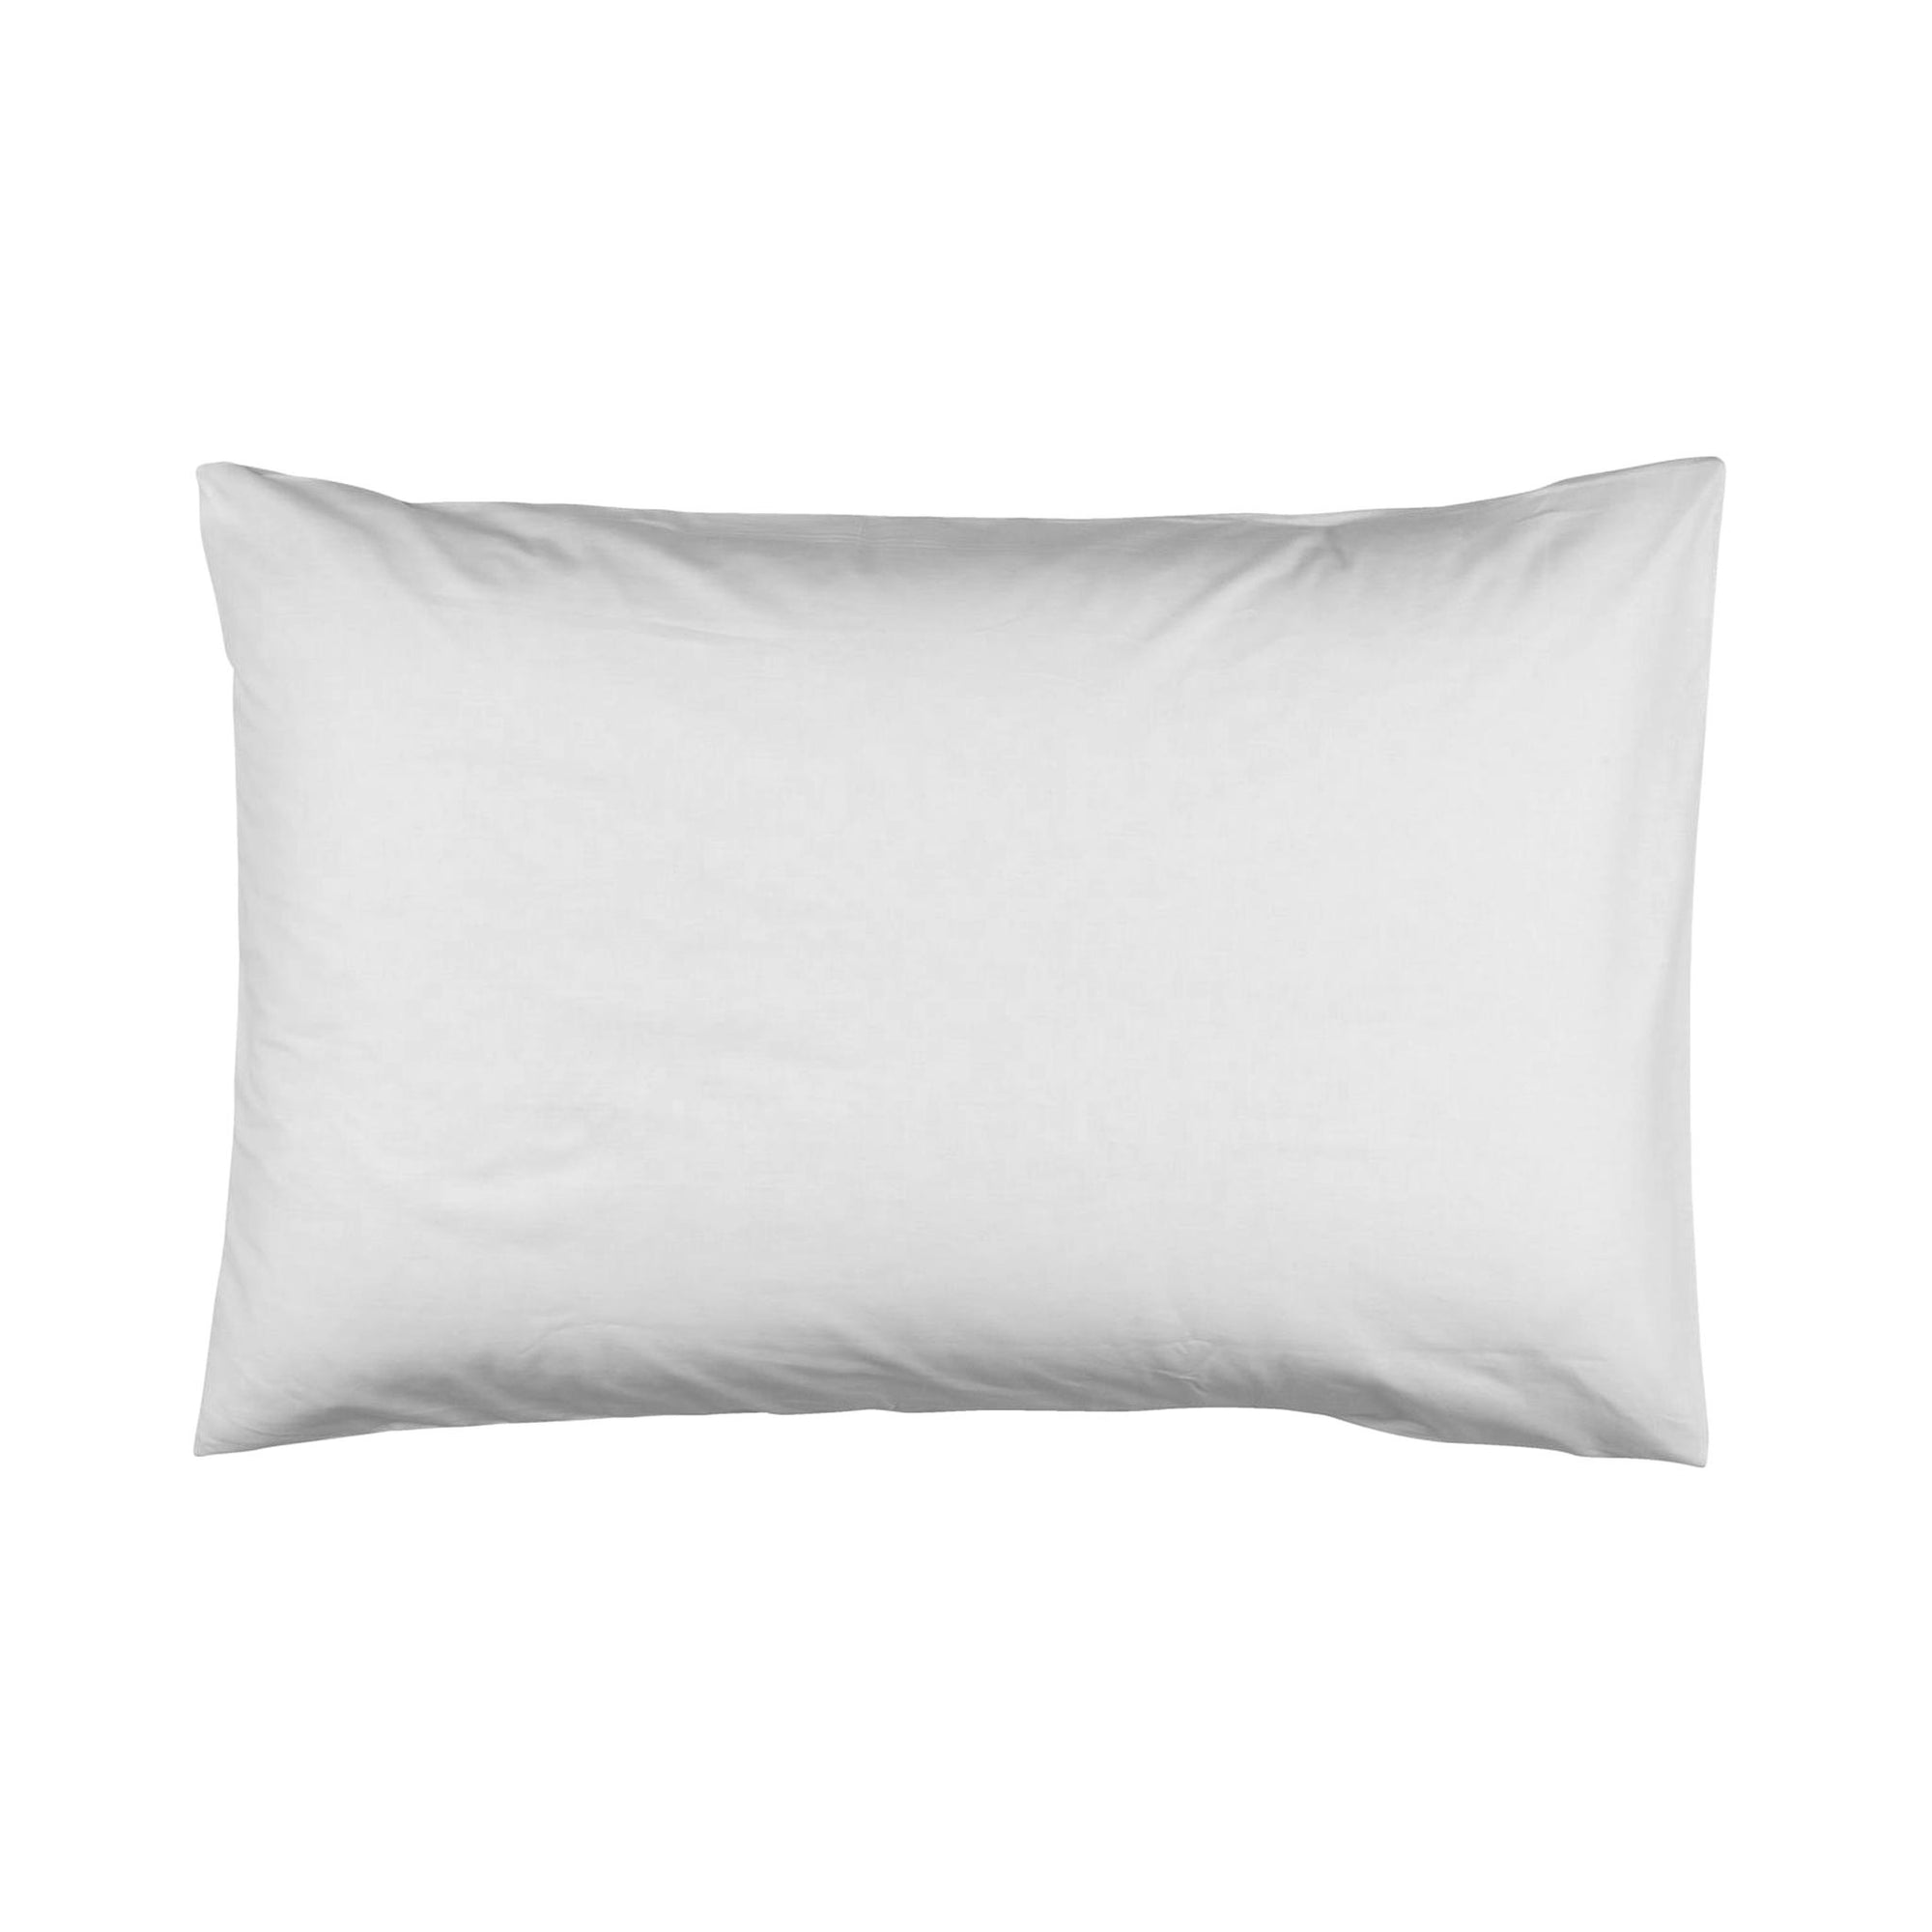 a white standard pillowcase 50x75